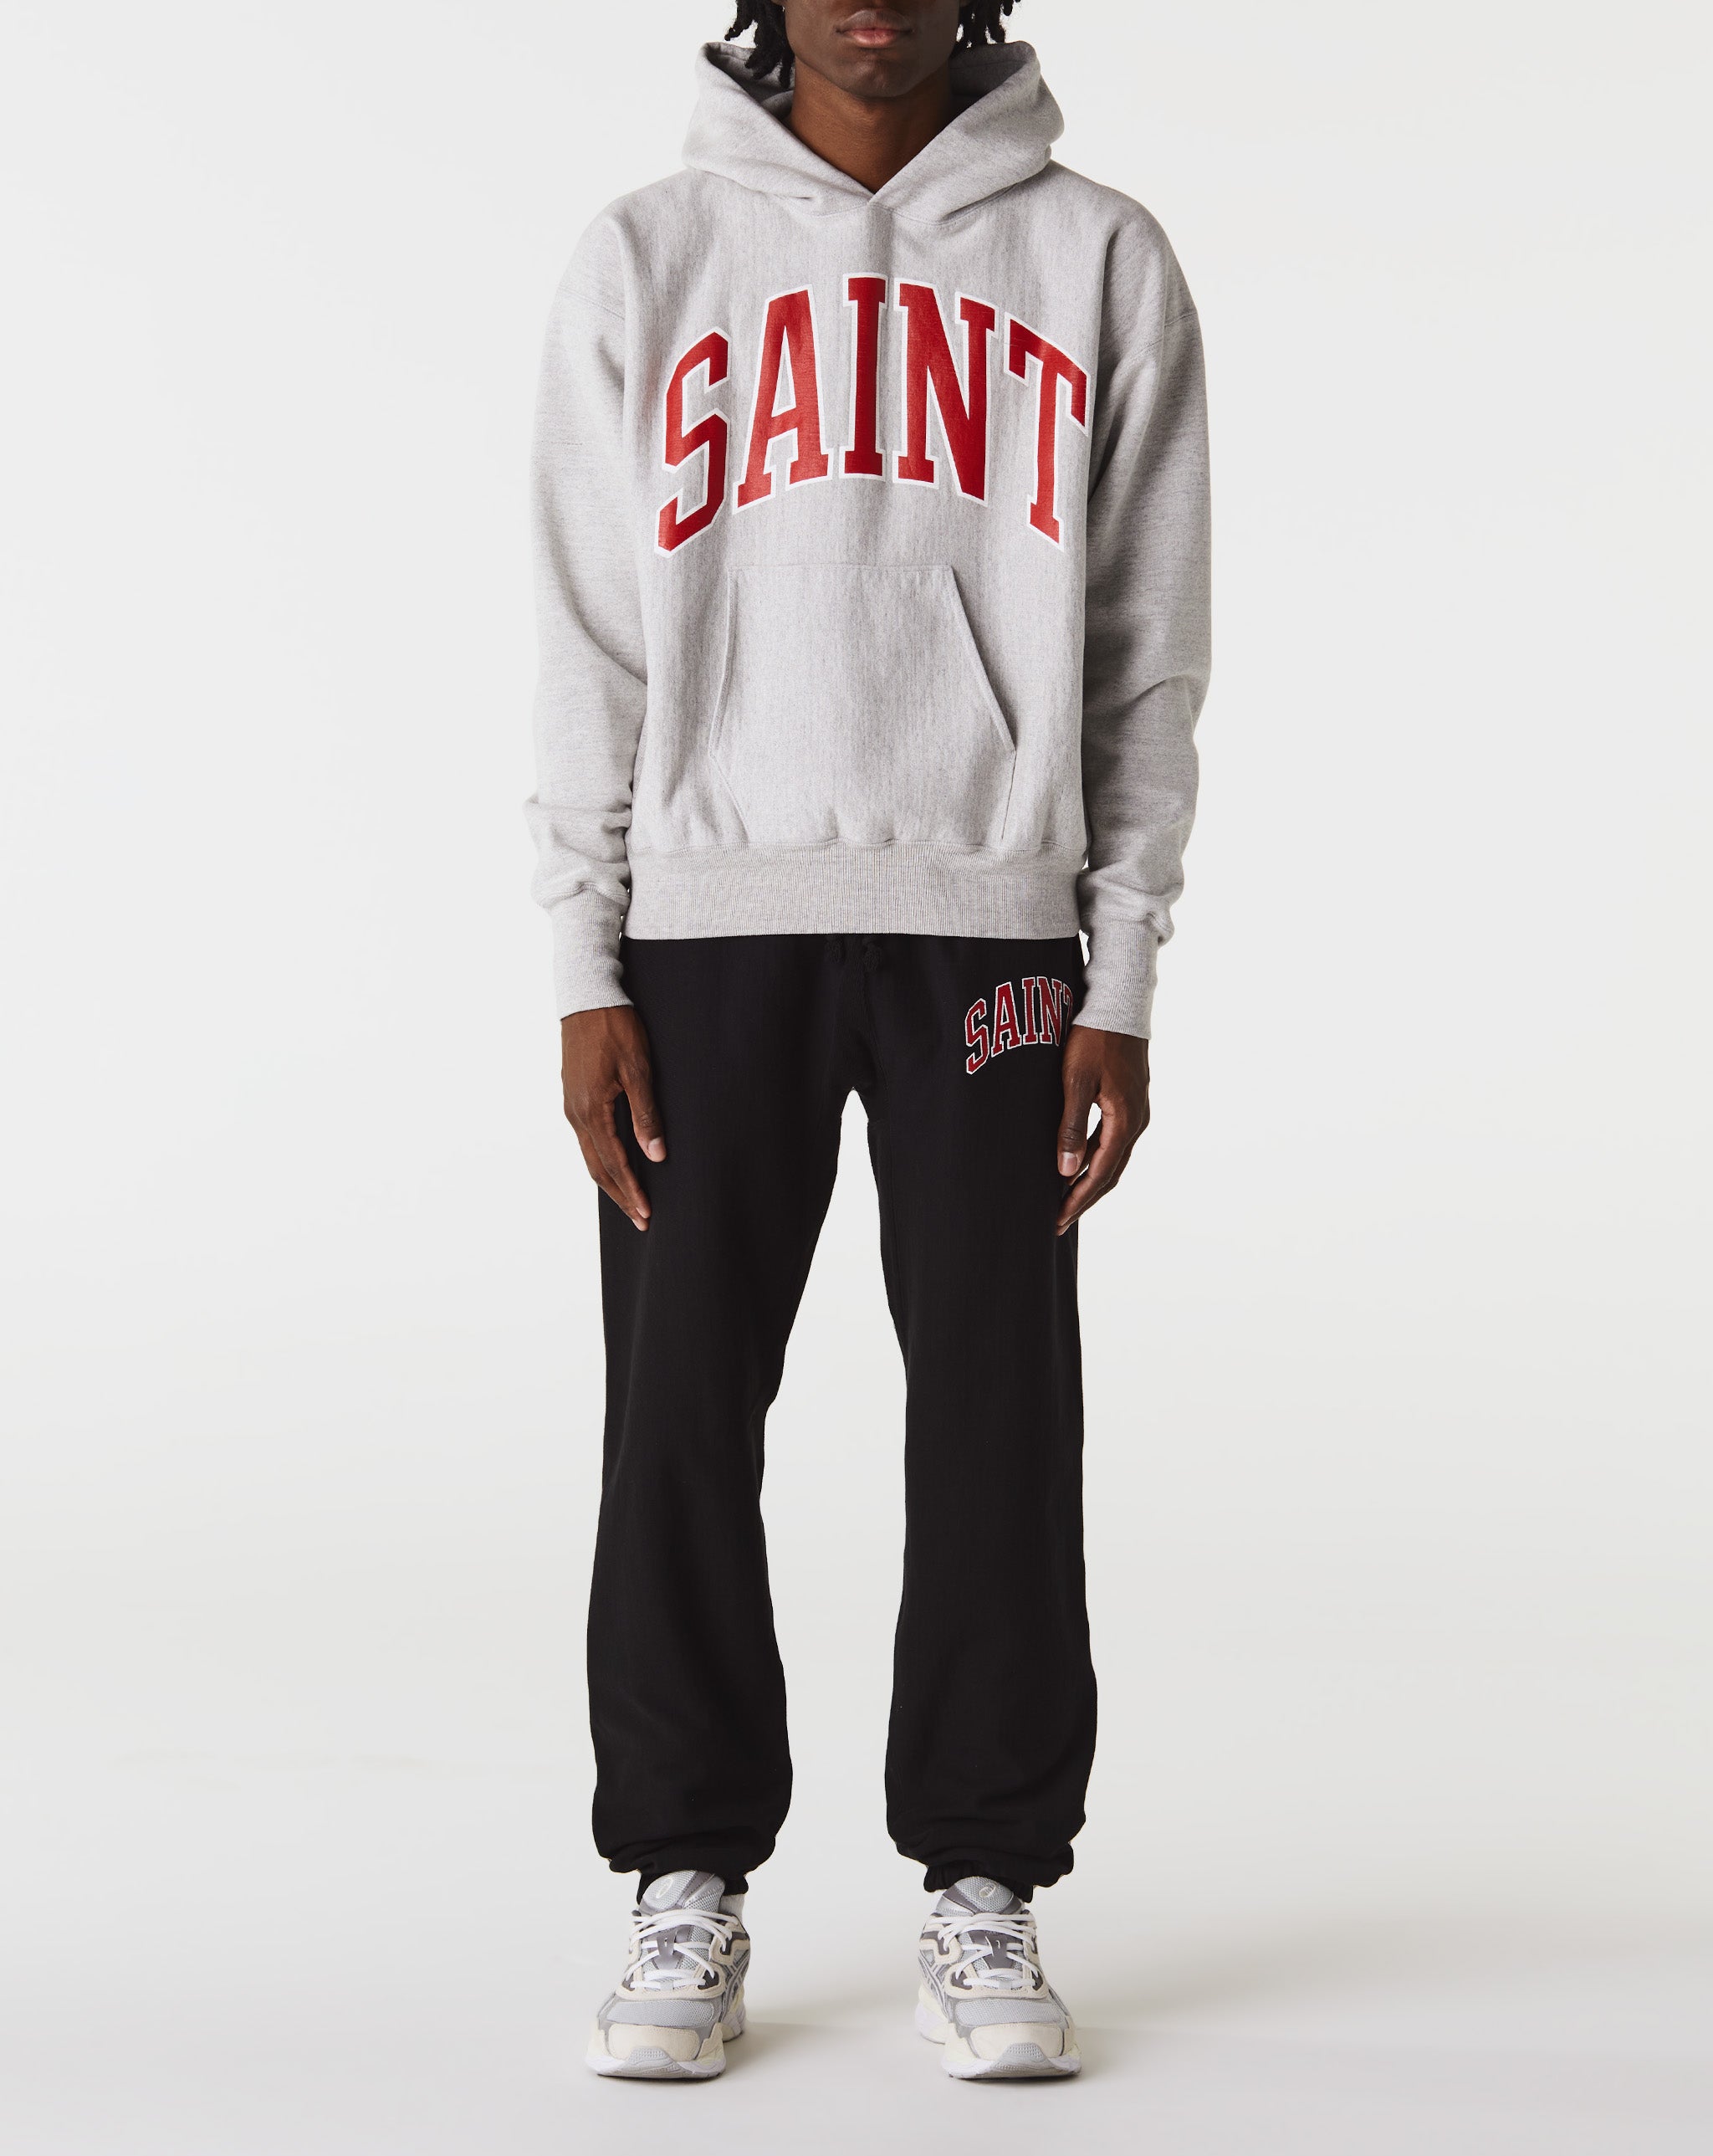 Saint Michael Shirts & Polos  - Cheap Cerbe Jordan outlet